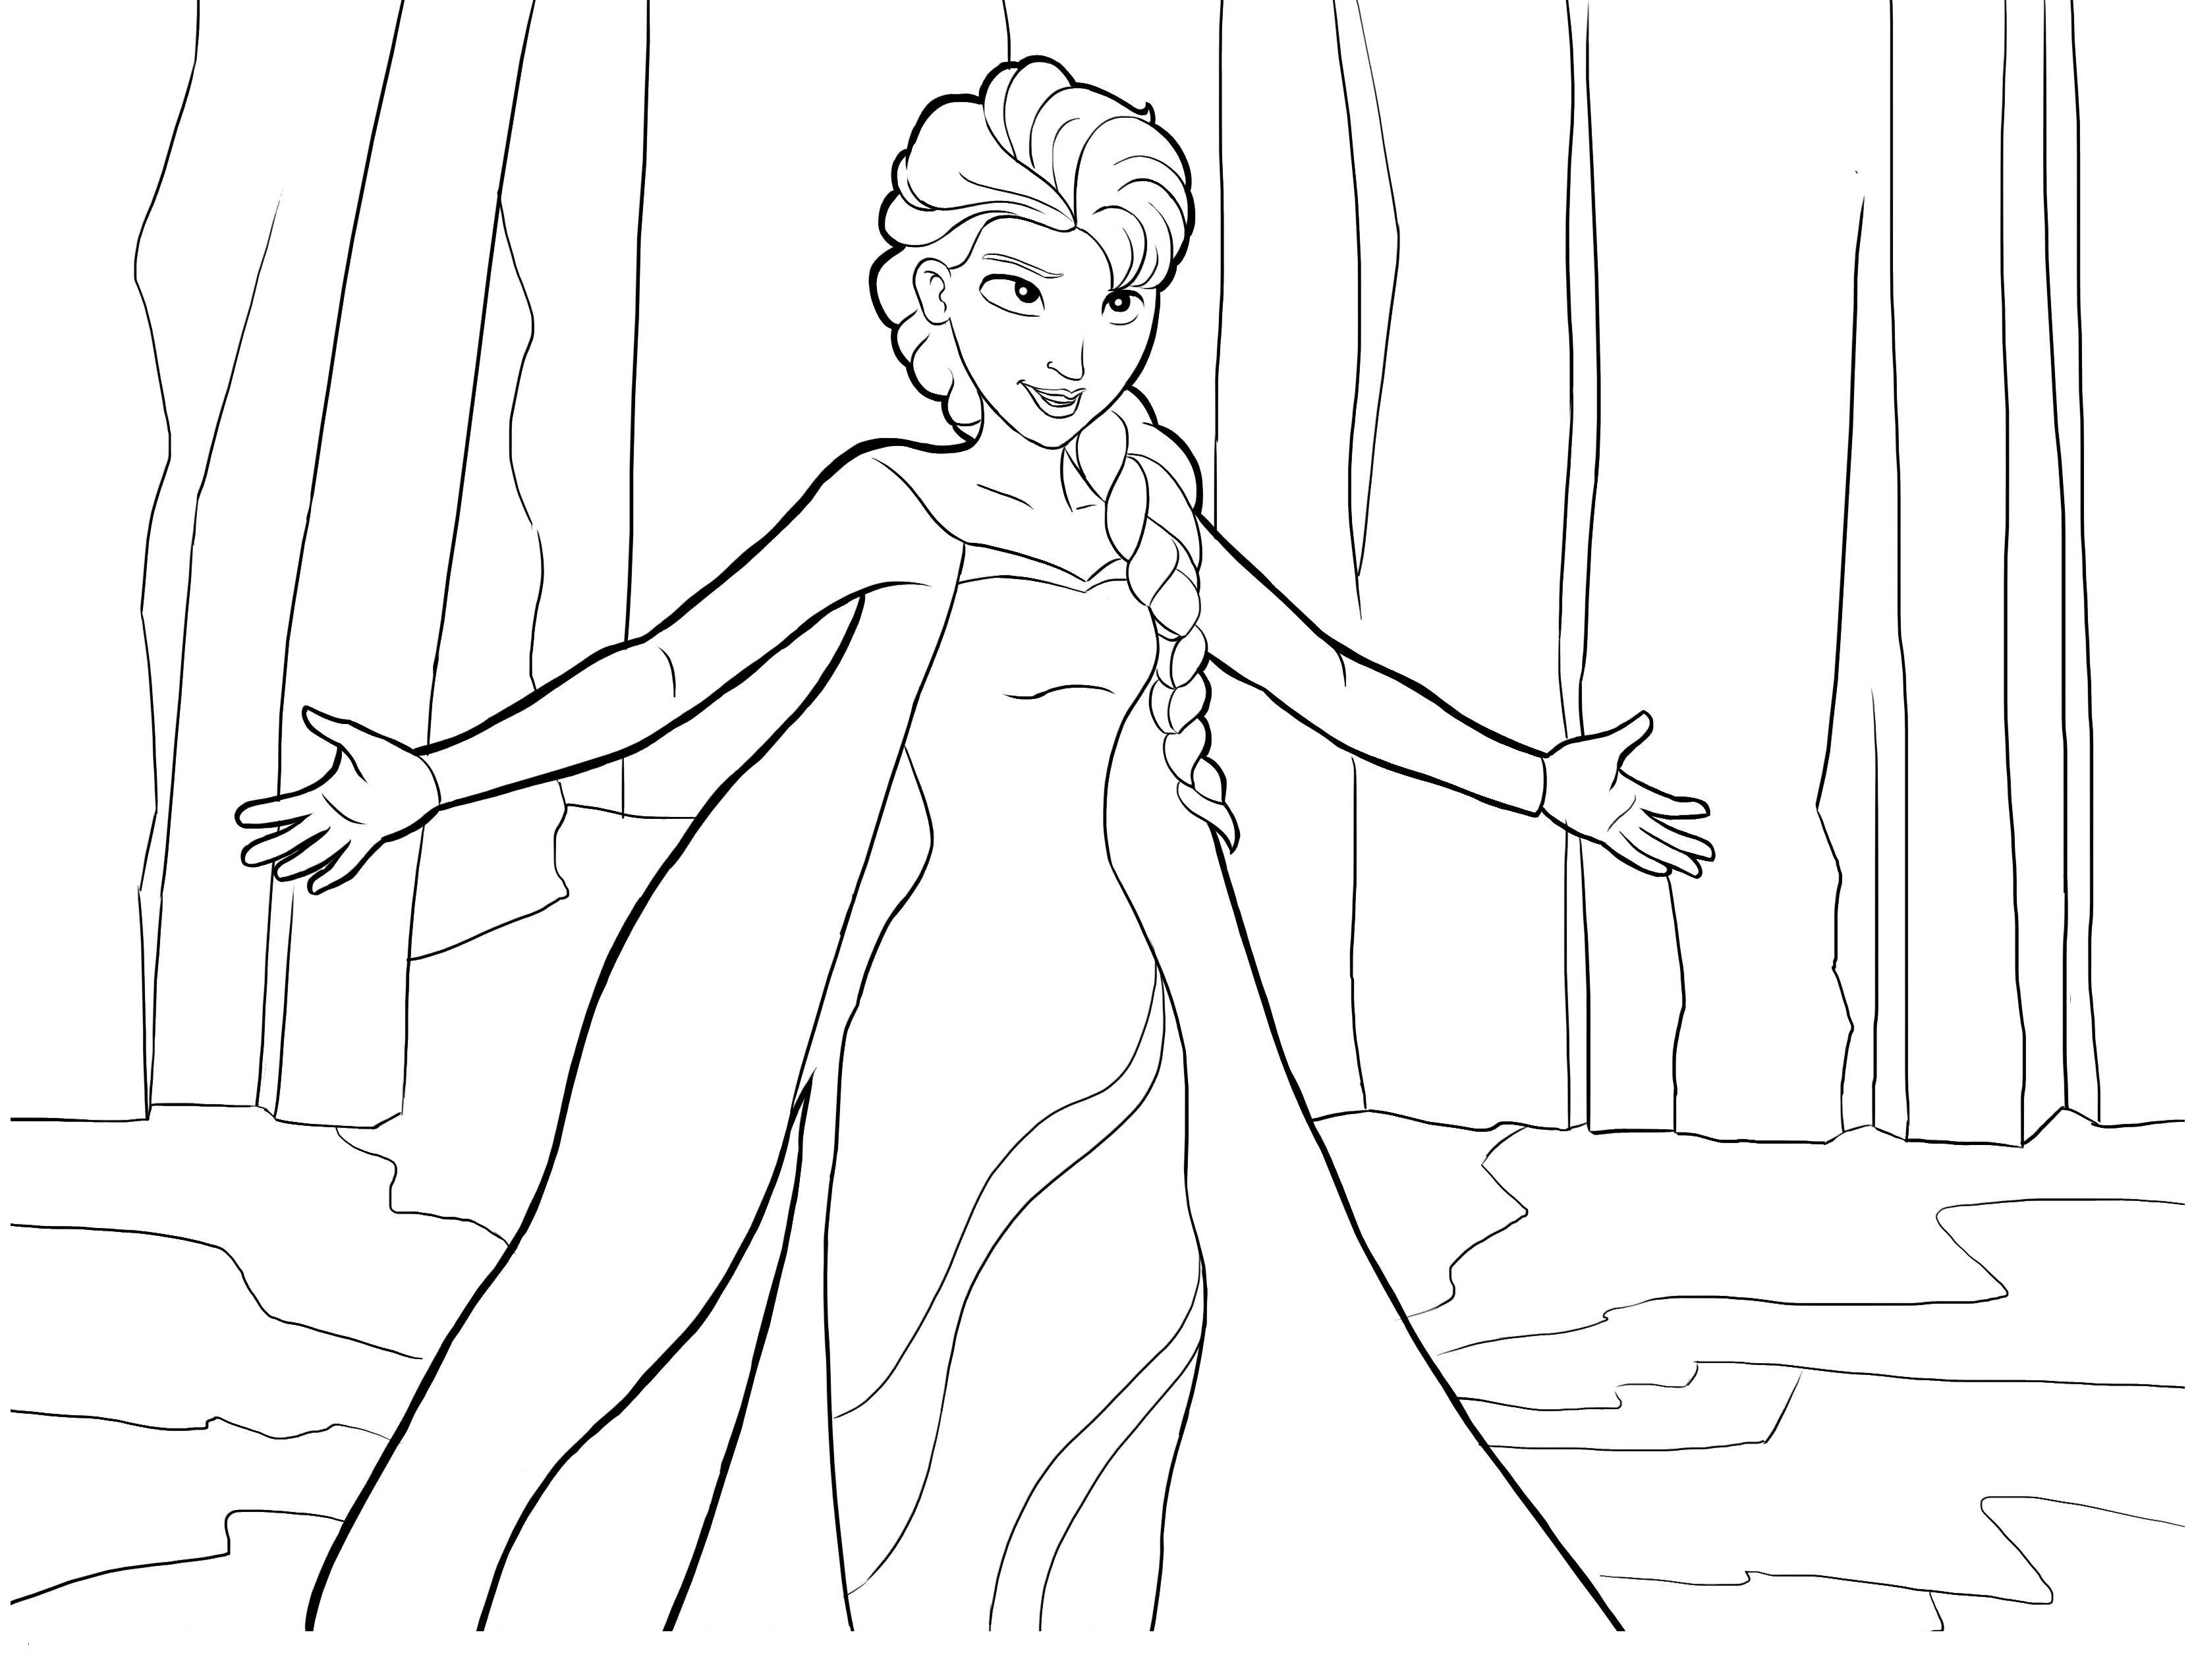 Desenhos grátis para colorir de Frozen: O Reino do Gelo para imprimir e colorir